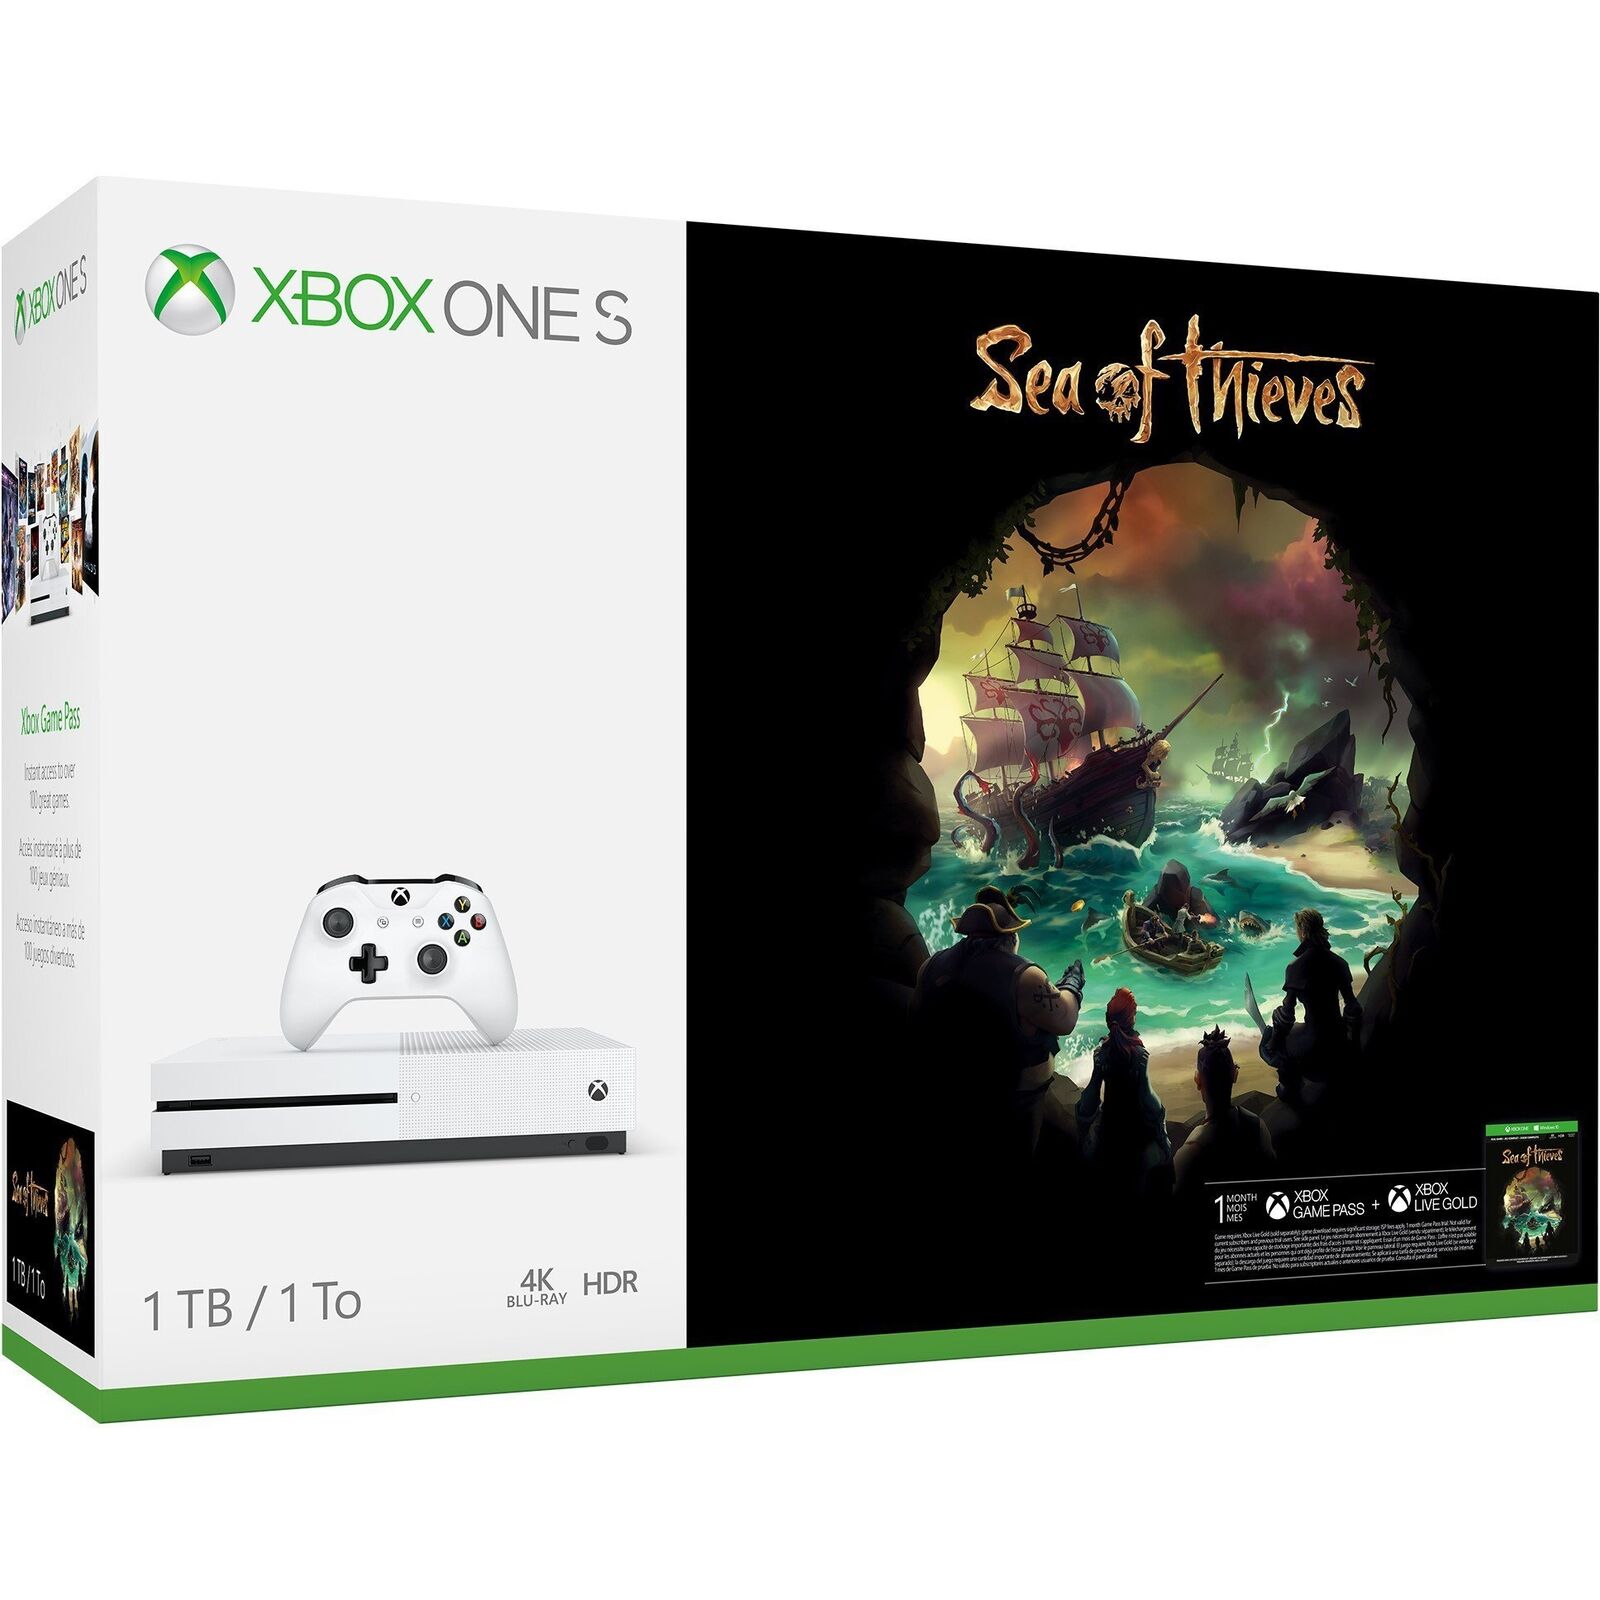 Xbox One S 1TB Console - Sea of Thieves Bundle Microsoft 234-00324